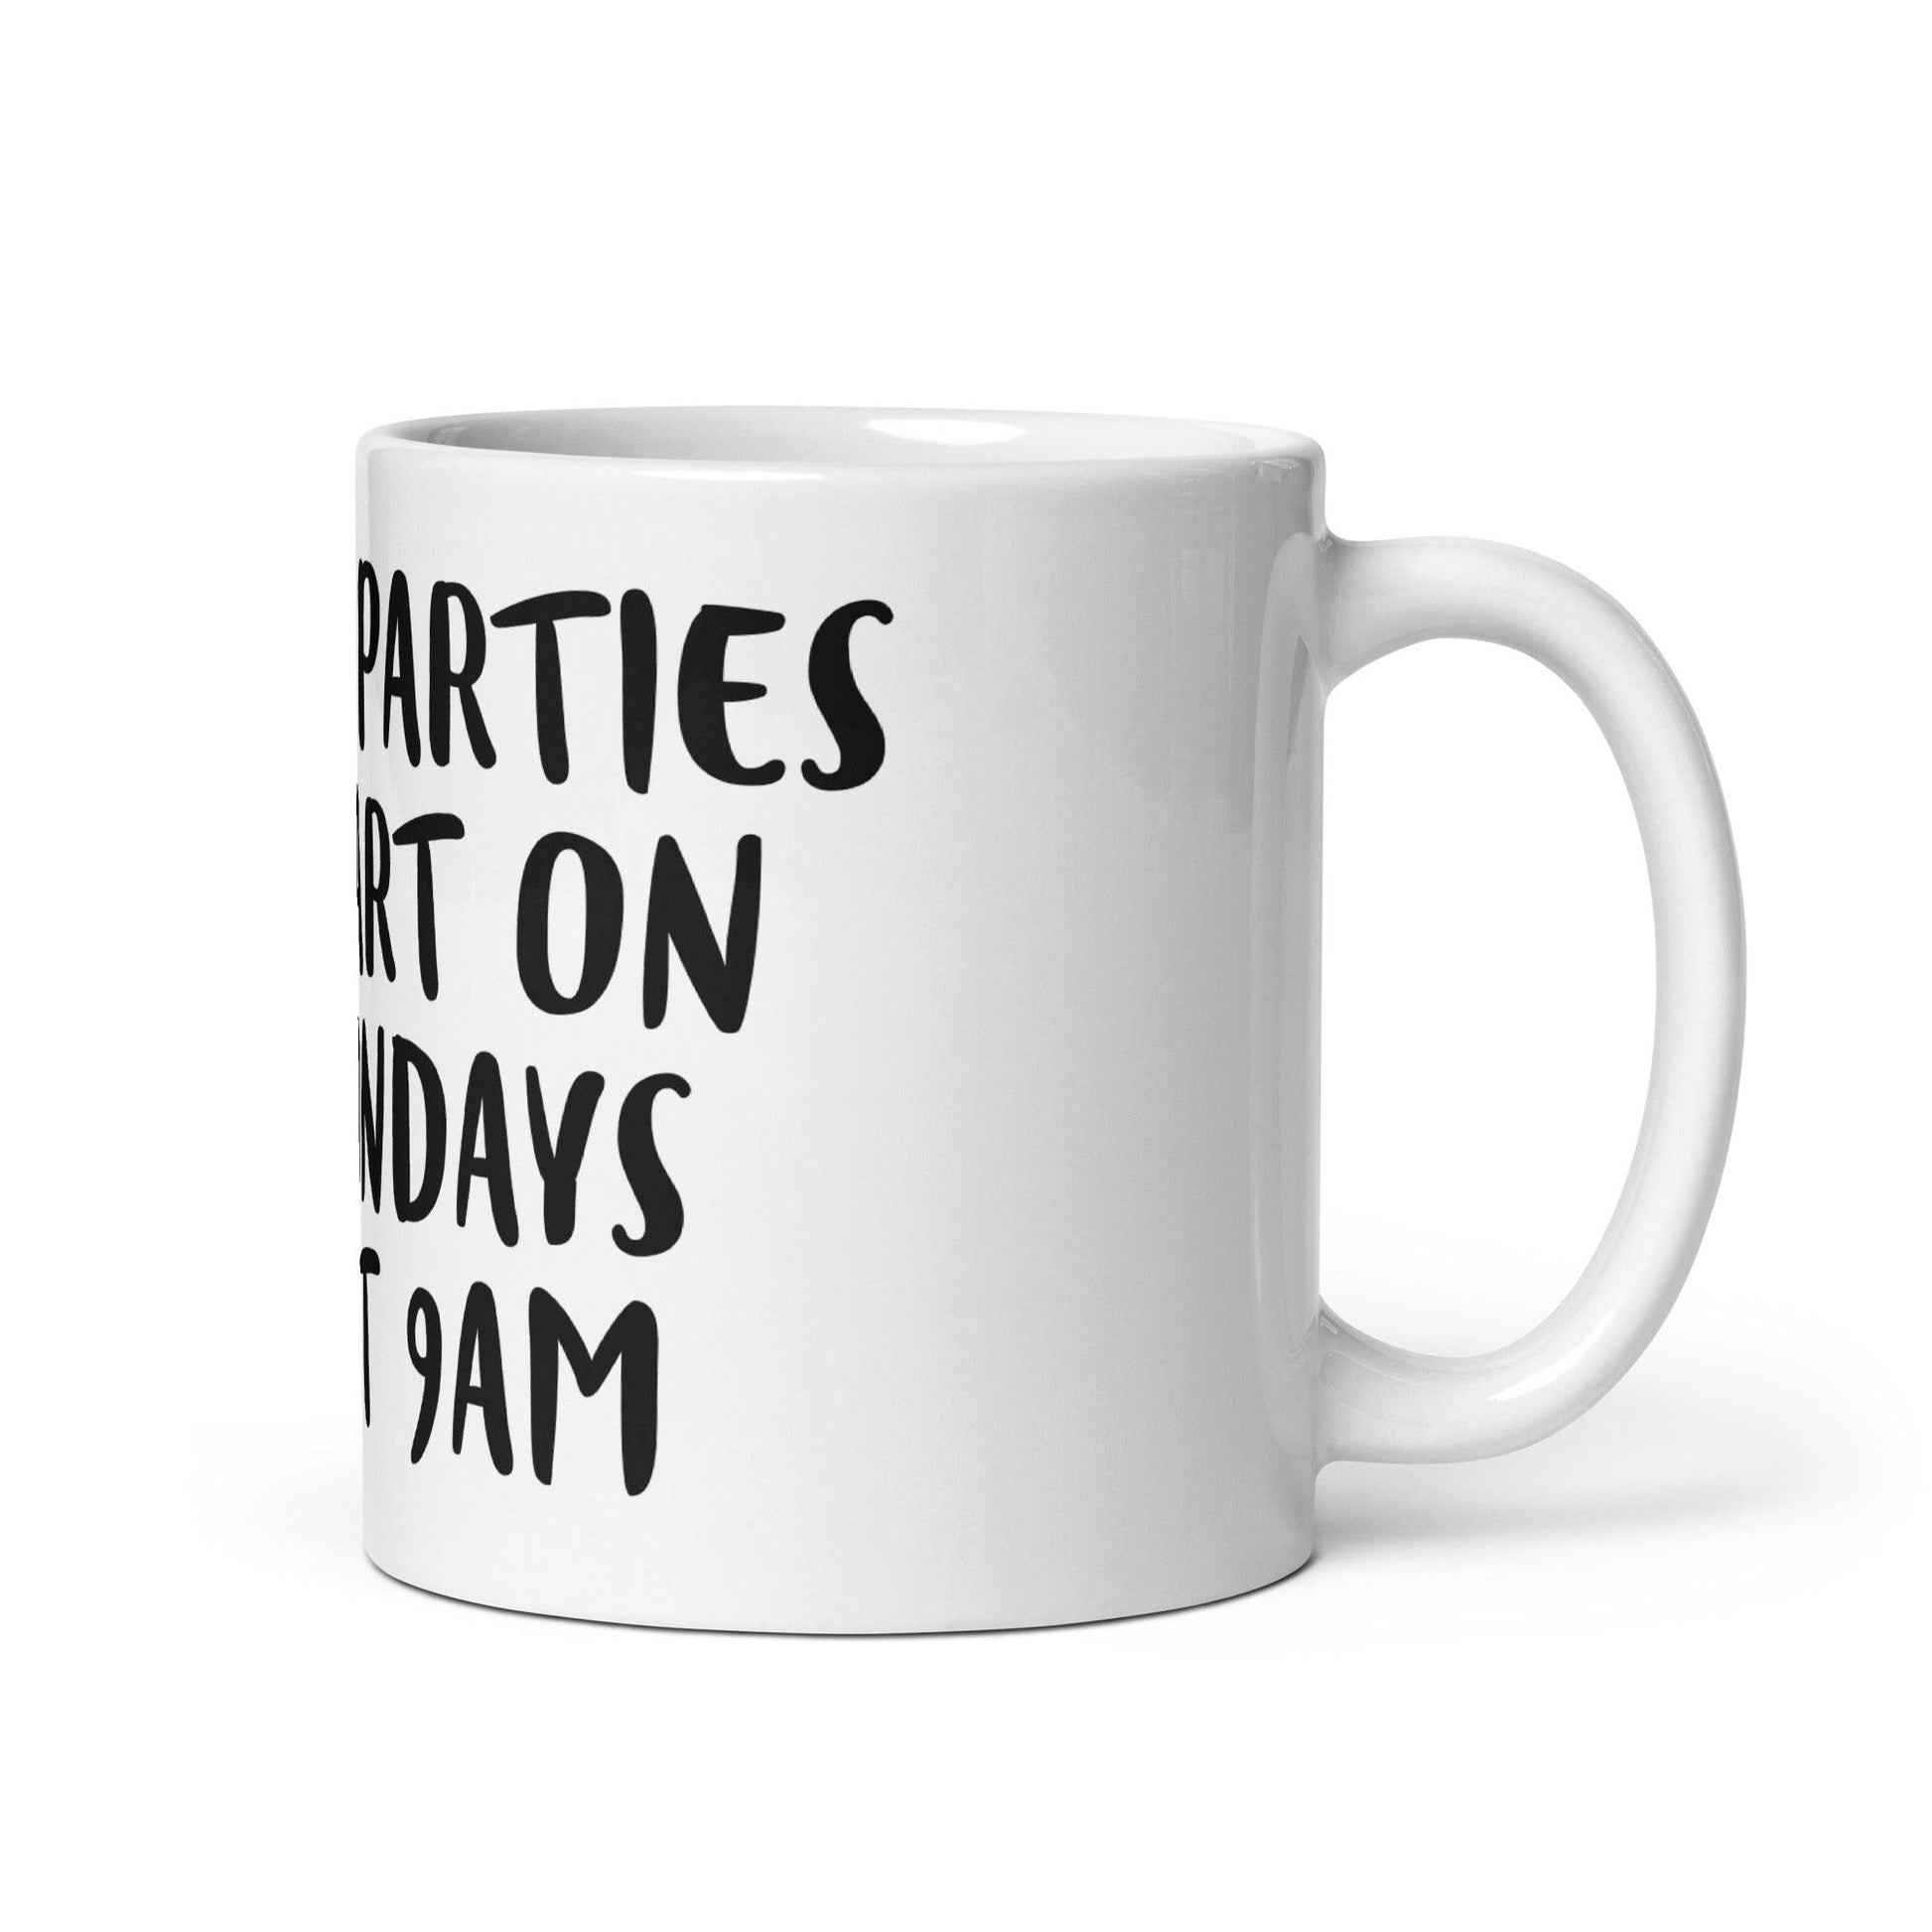 My parties start on Sundays at 9AM - White glossy mug - CatsOnDrugs